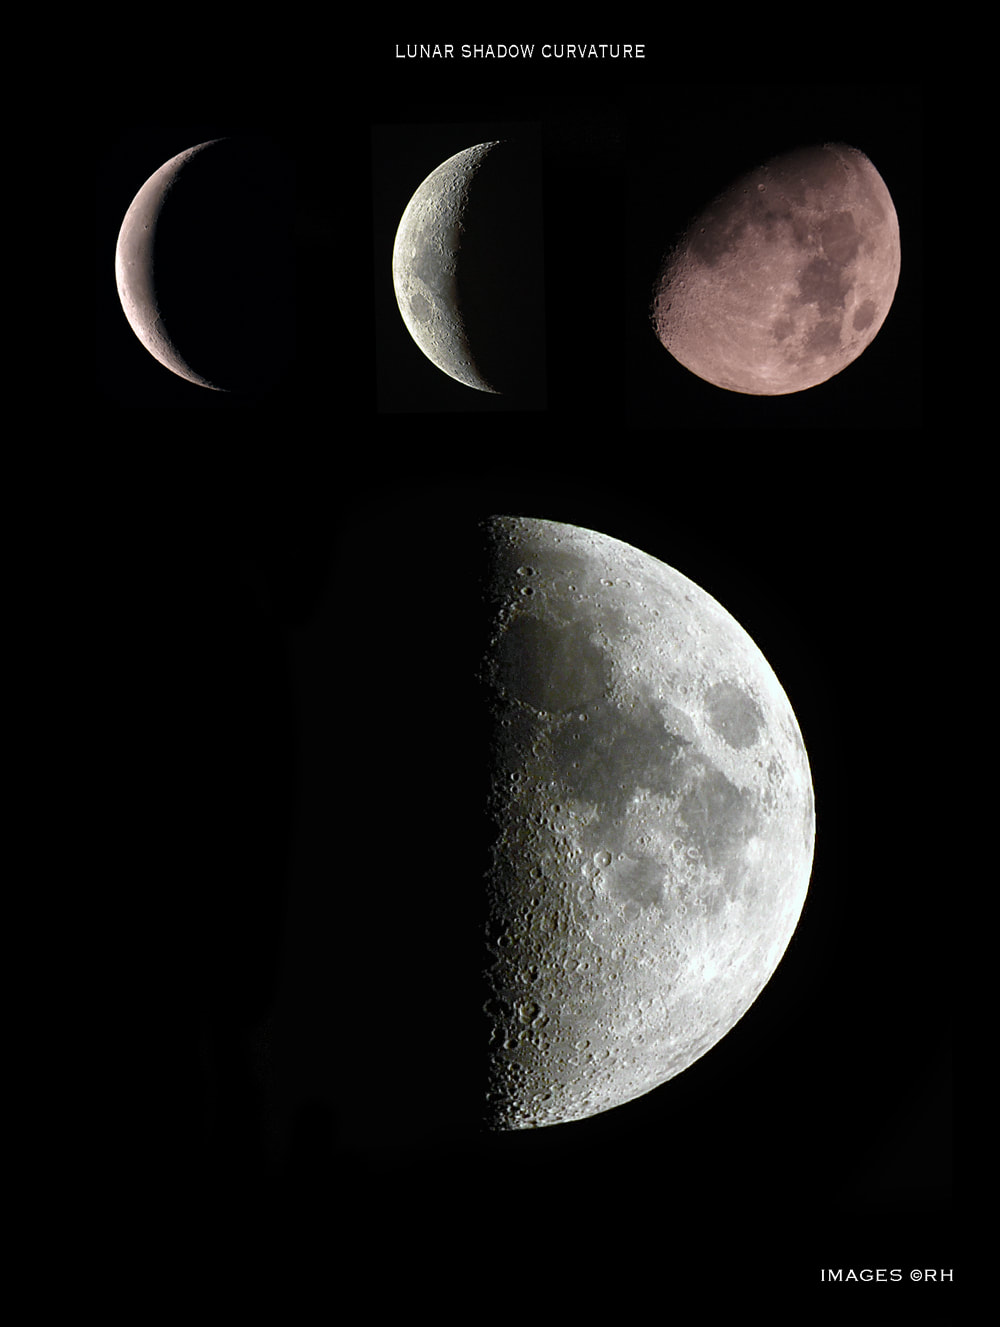 lunar curavature shadow, images by Rick Hemi